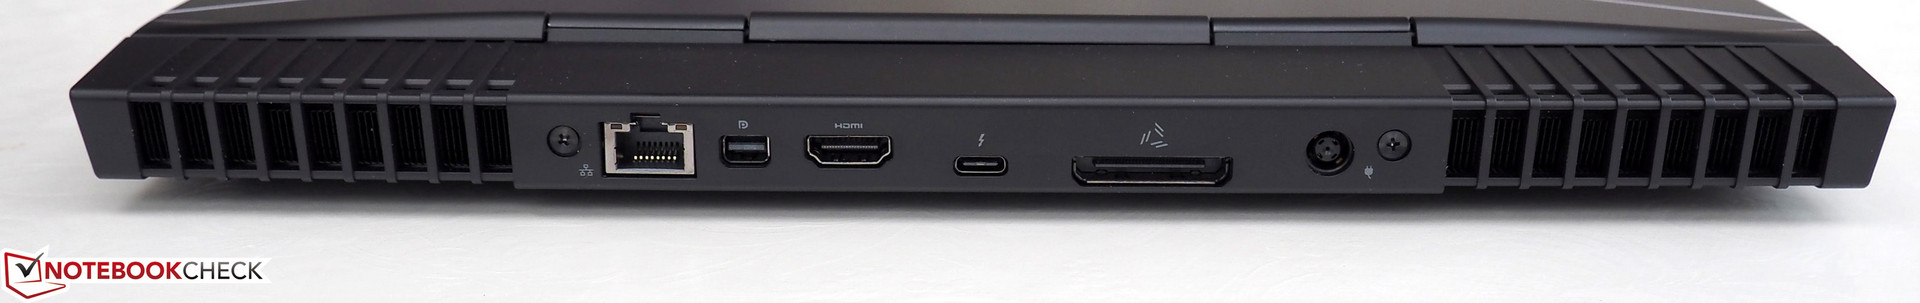 Alienware 13 R3 (FHD, i5, GTX 1050 Ti) Laptop Review ...